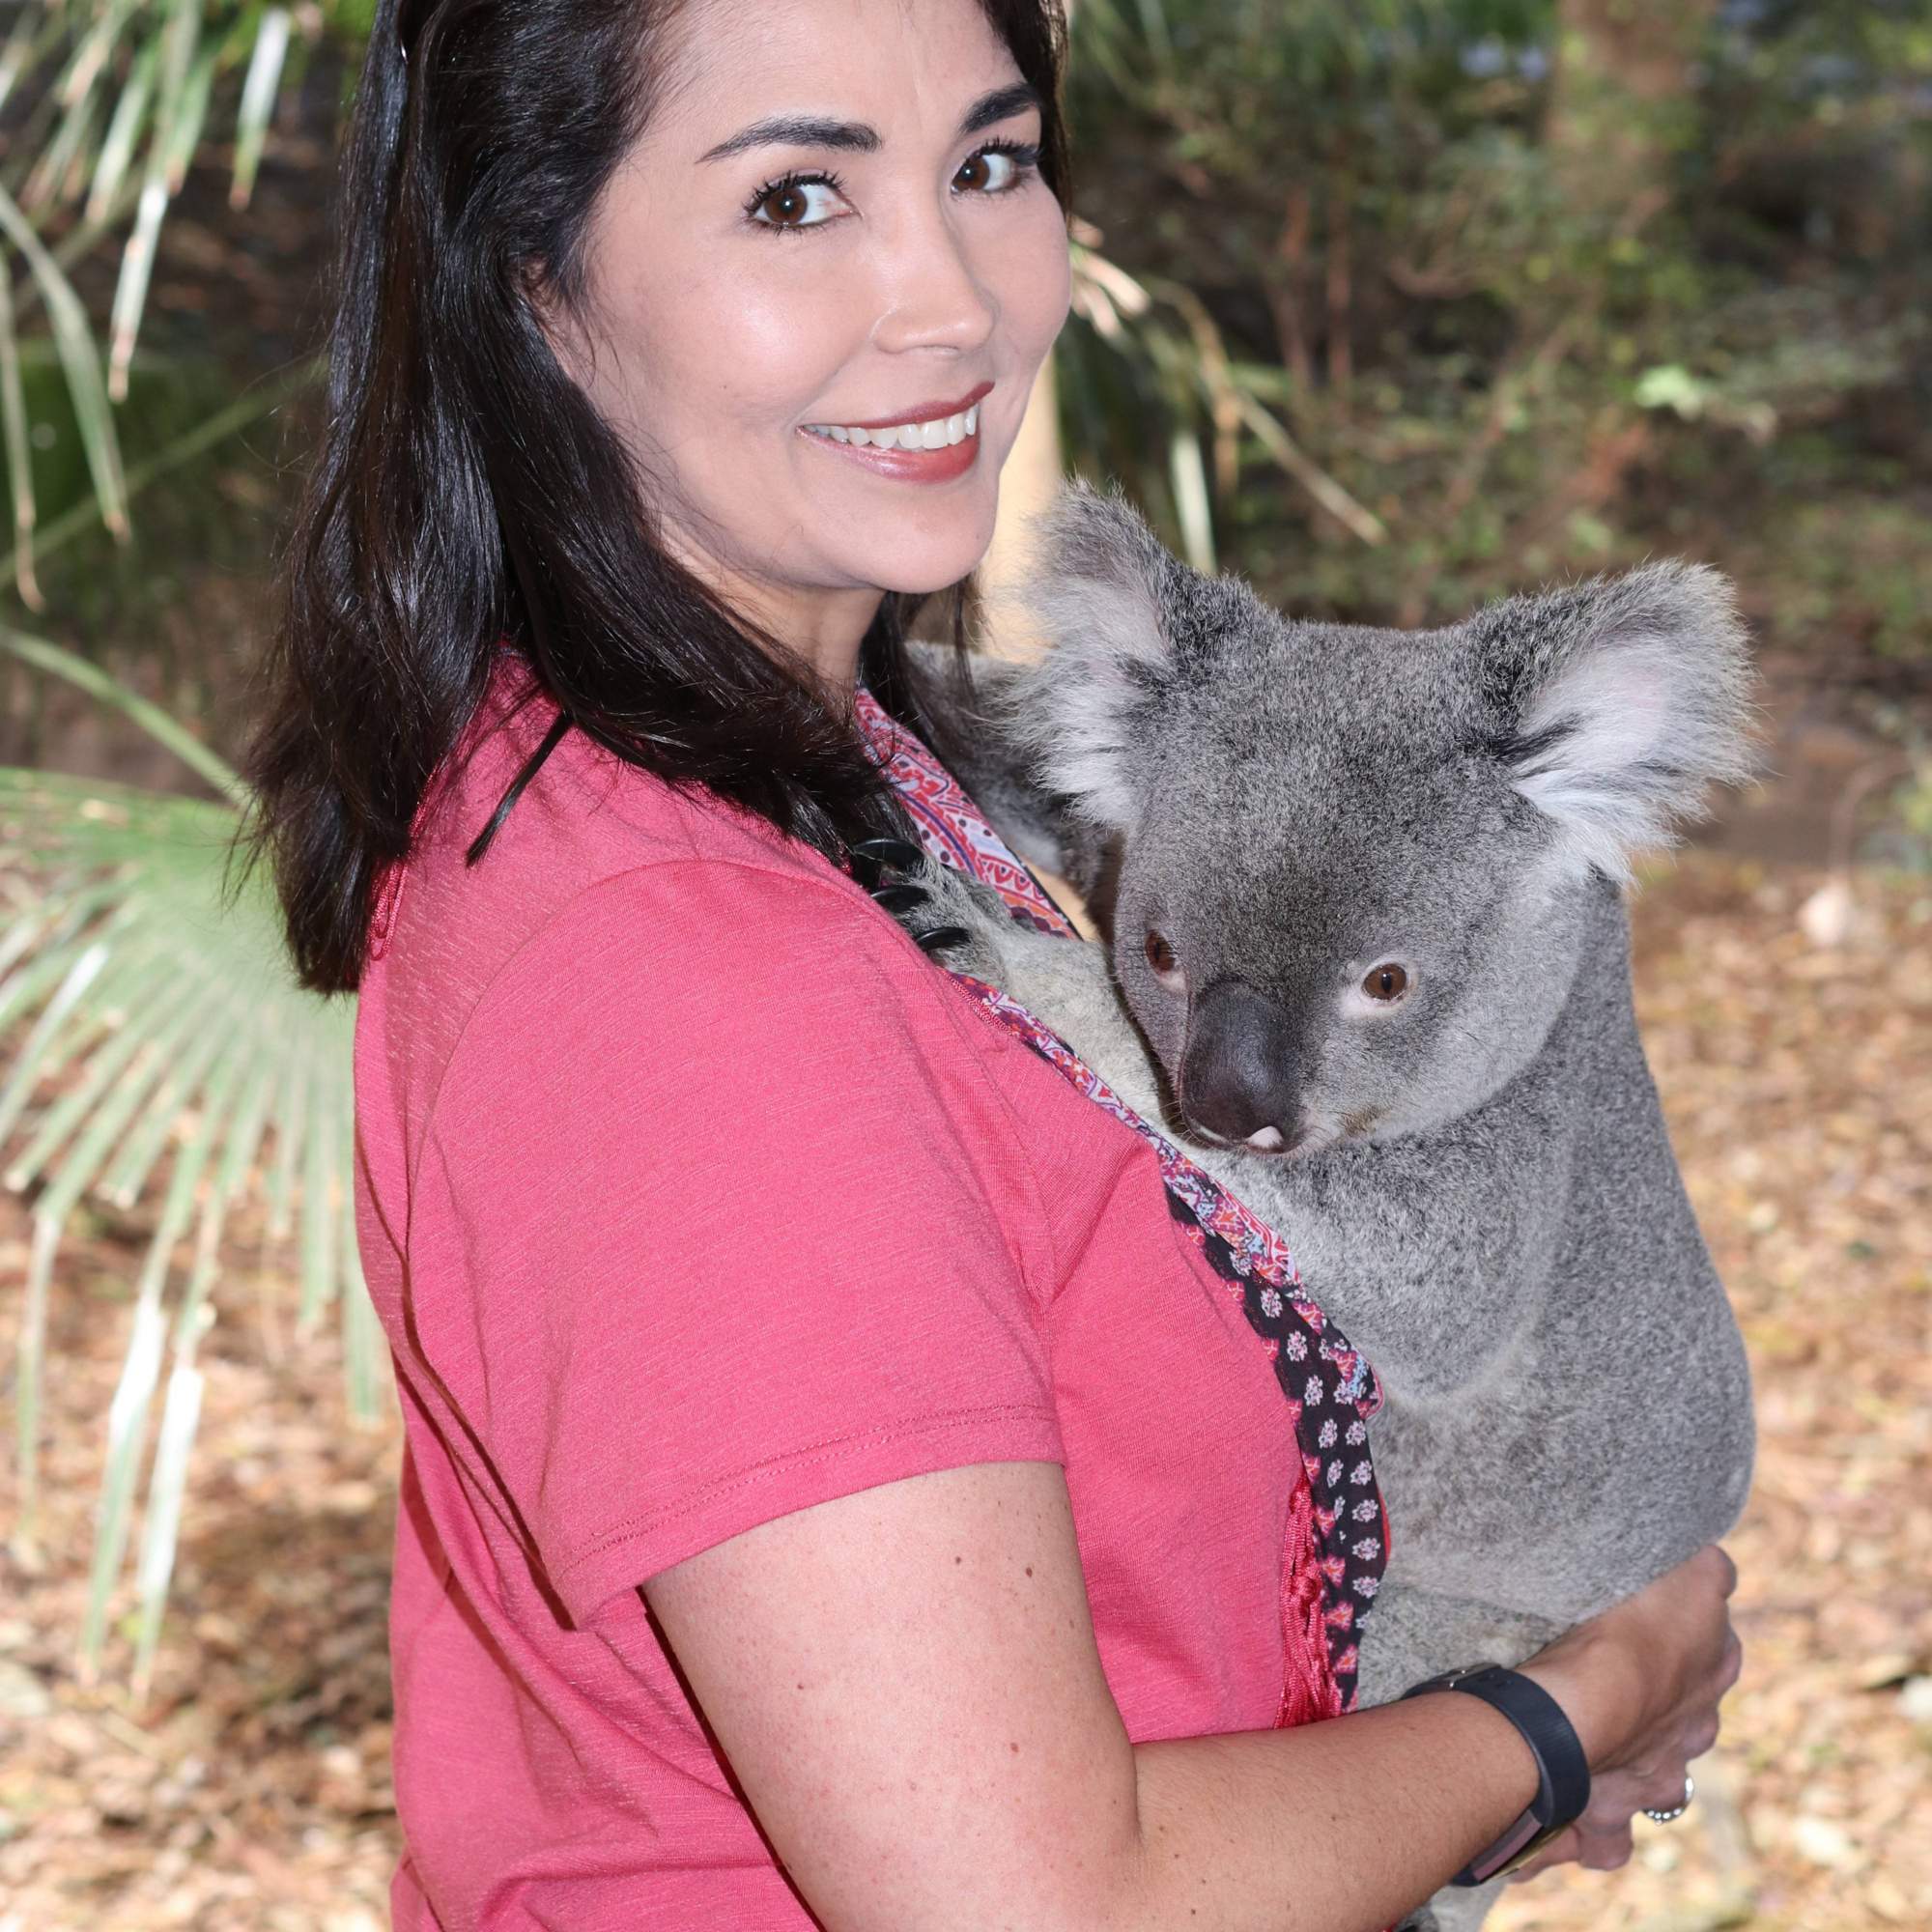 Meeting Sprocket the koala in Australia